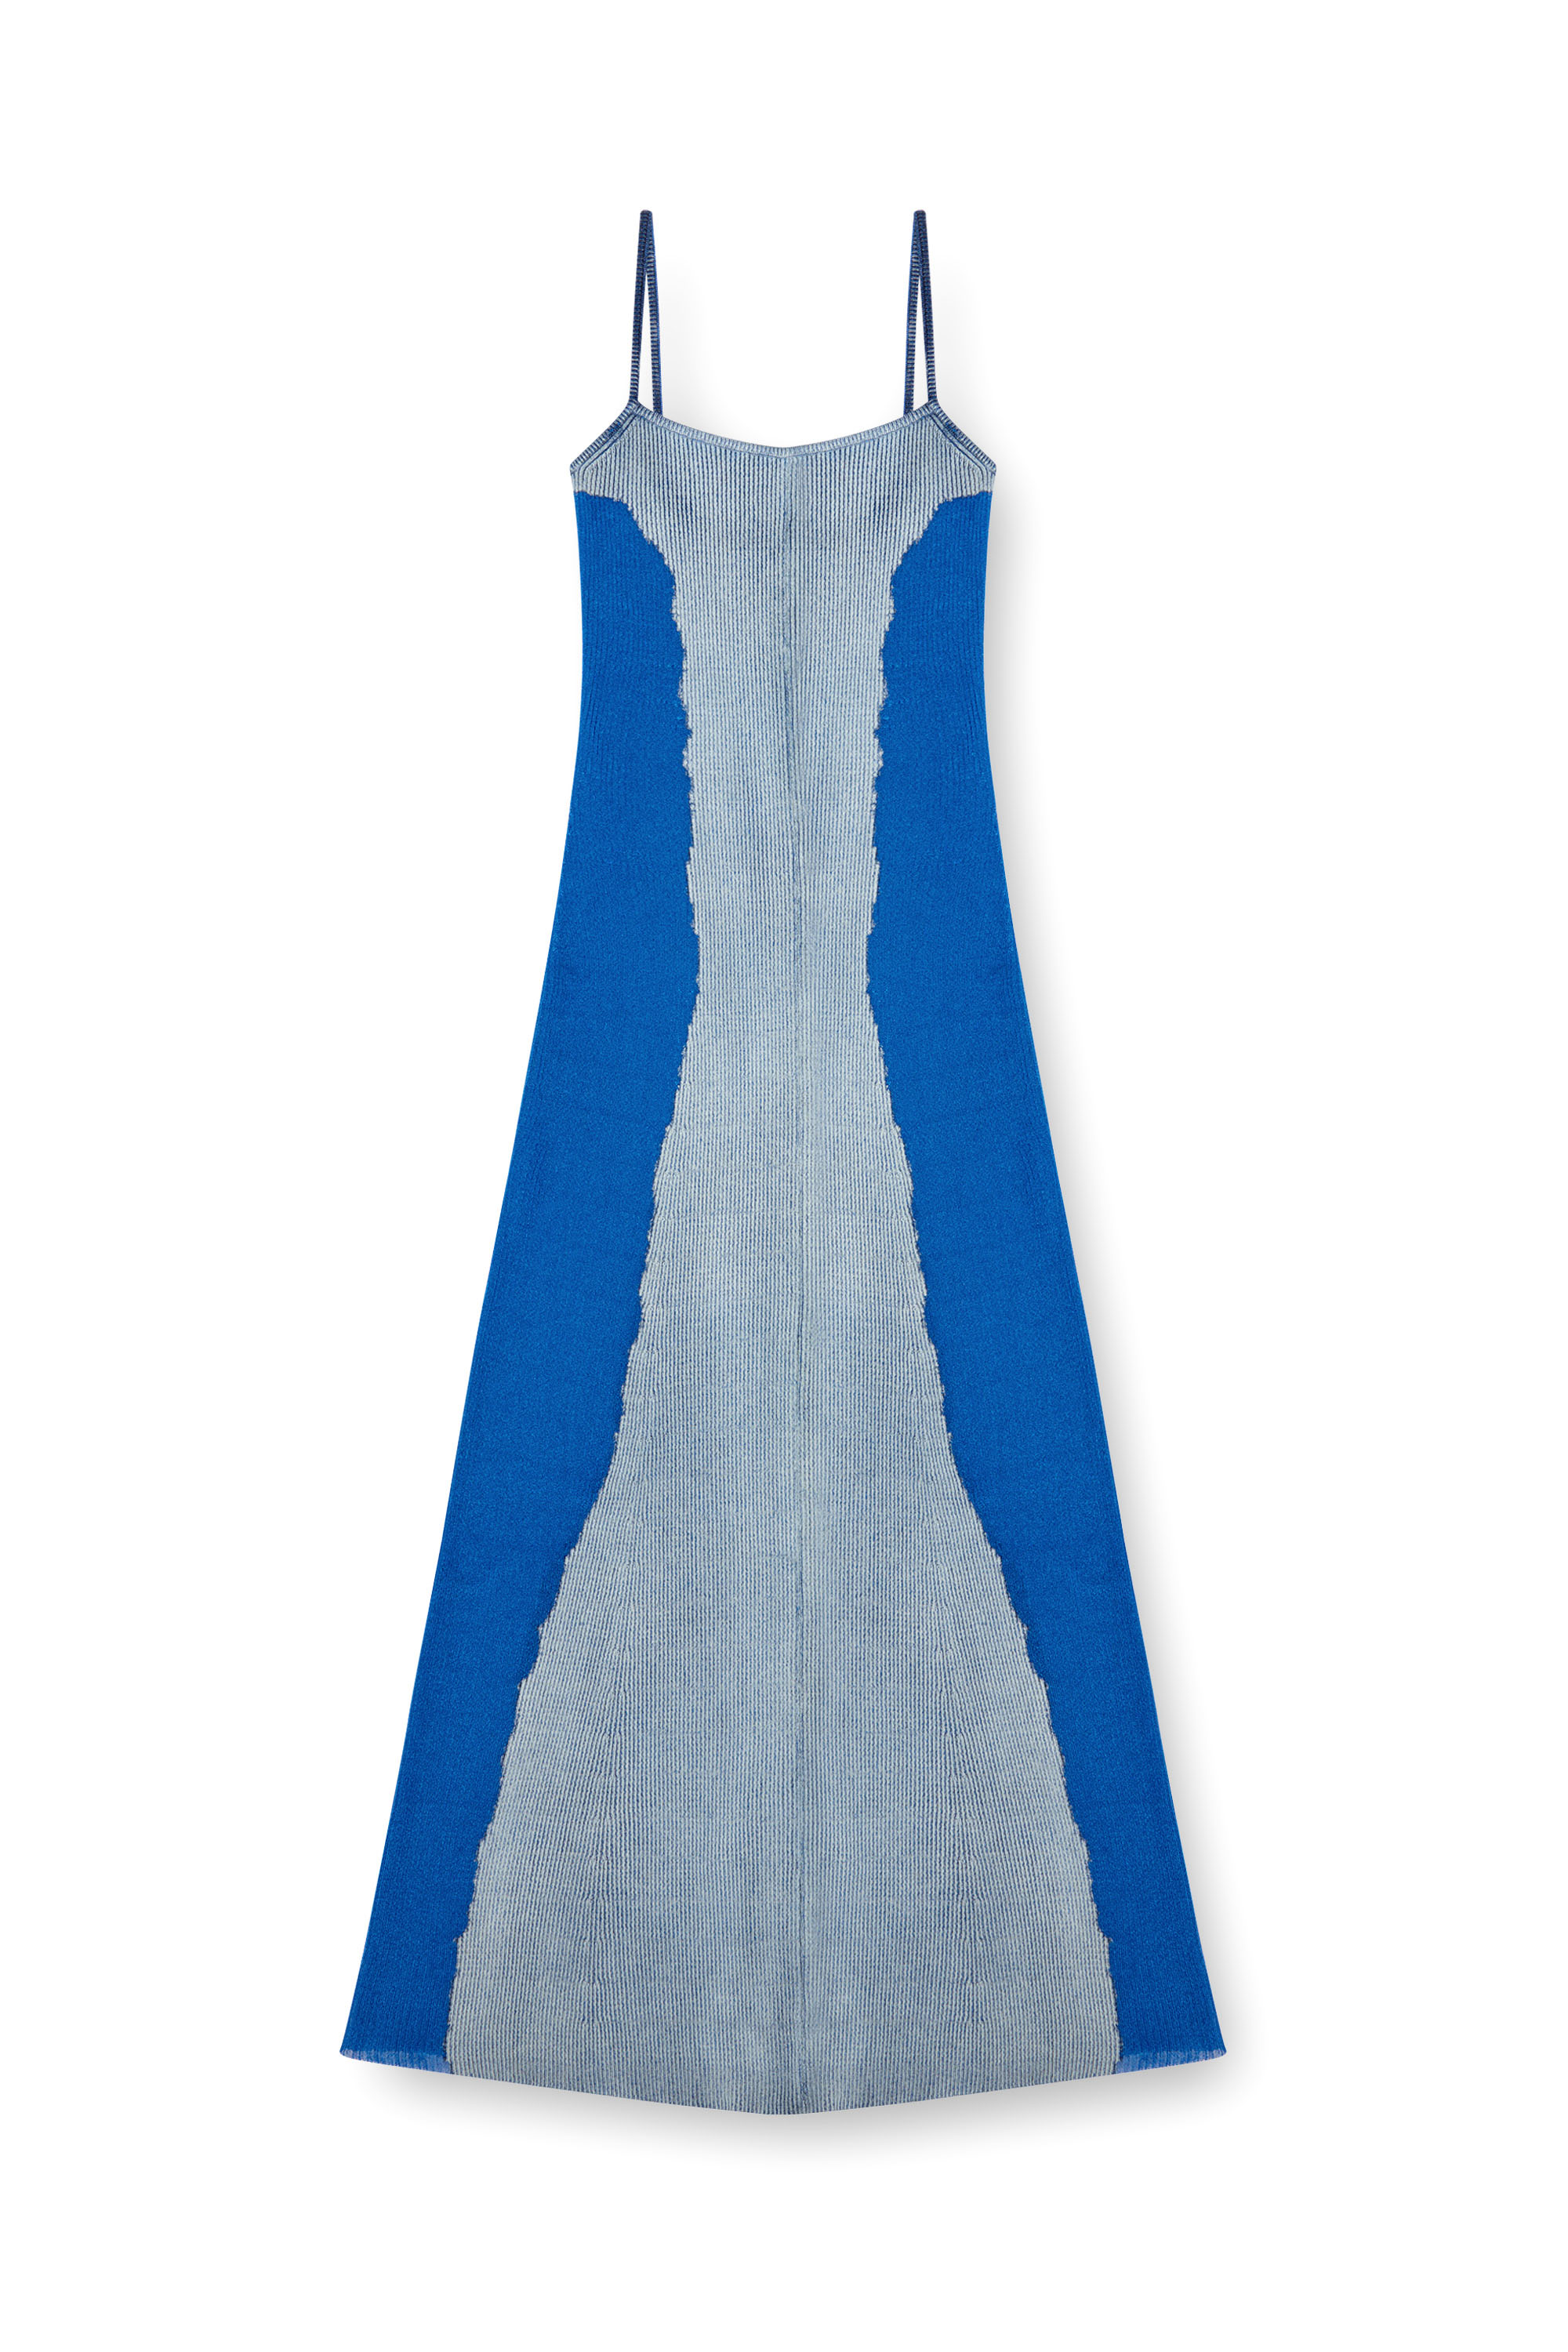 Diesel - M-EDAGLIA, Mujer Vestido lencero midi de tejido con técnica dévoré in Azul marino - Image 1